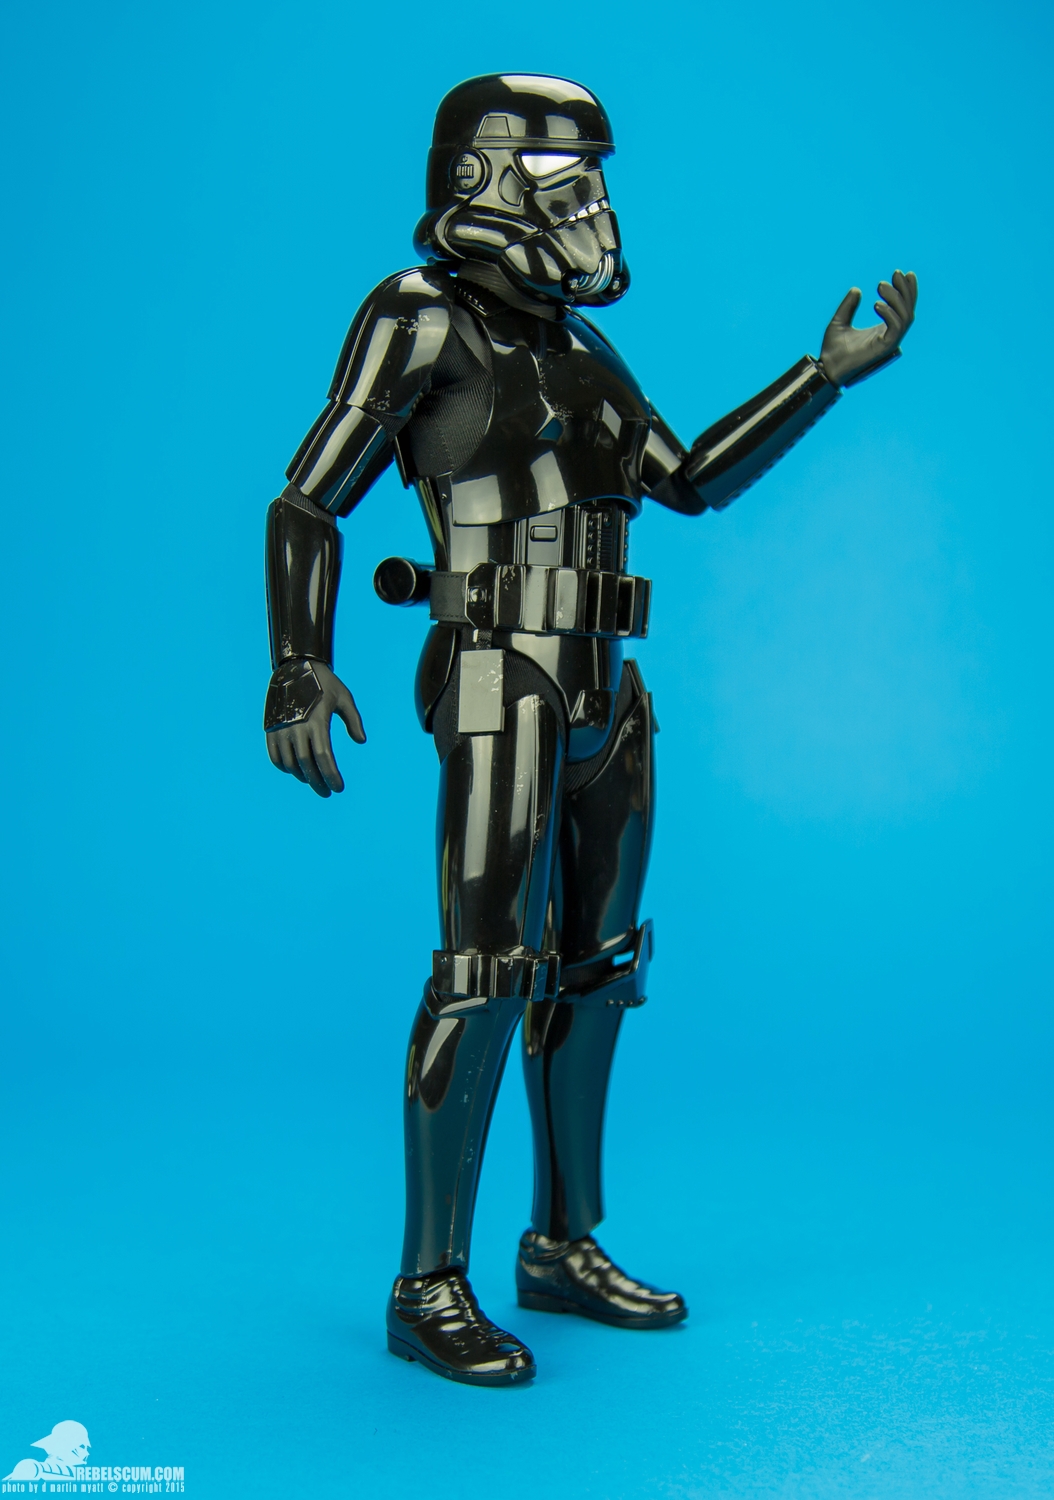 MMS271-Shadow-trooper-Hot-Toys-Star-Wars-figure-002.jpg